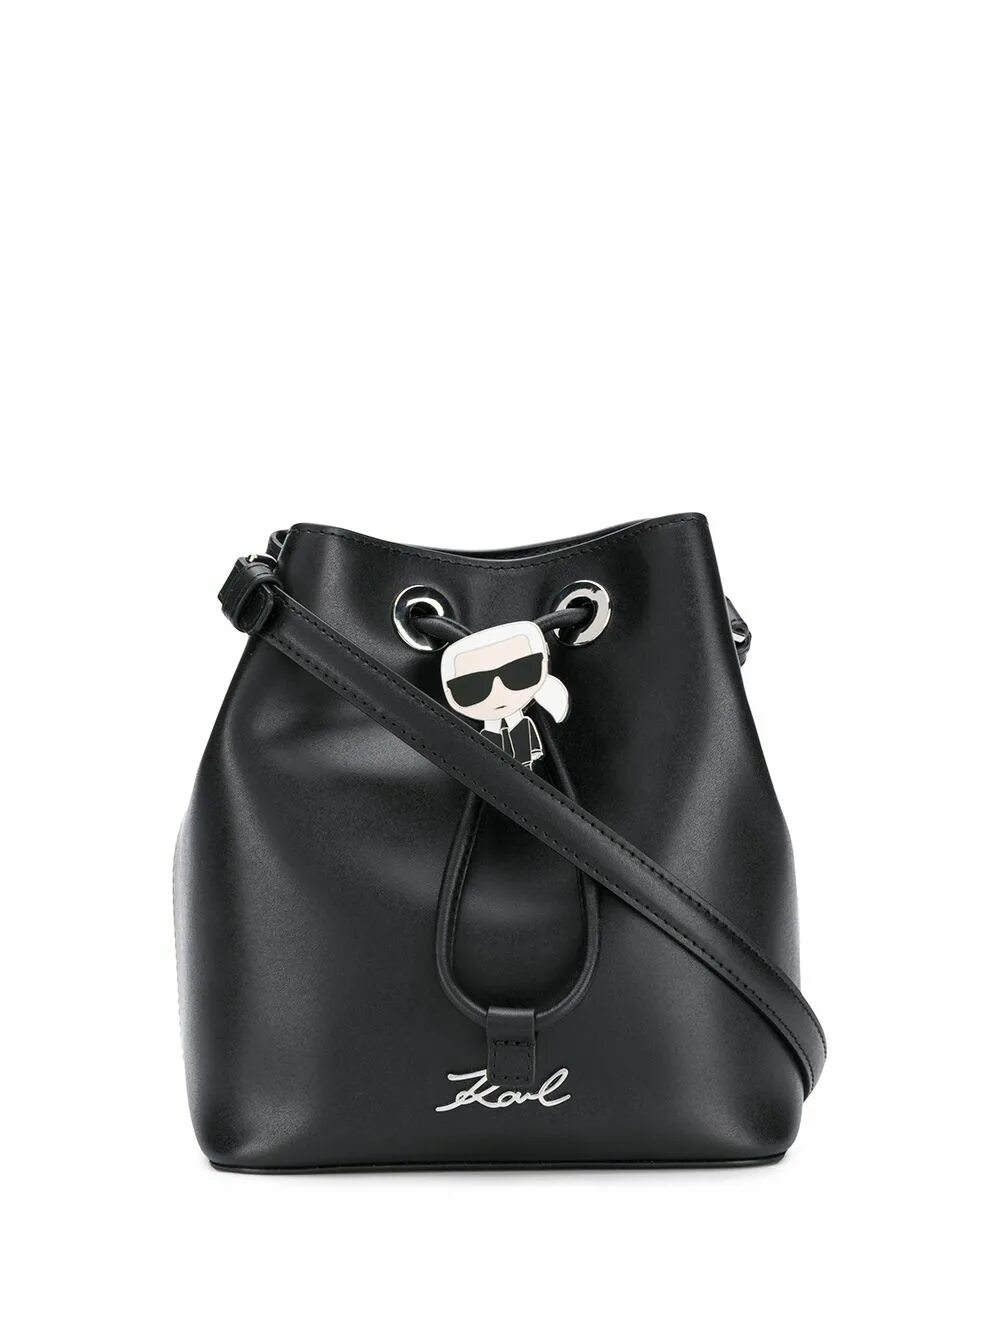 Купить сумку лагерфельд оригинал. Сумка Karl Lagerfeld ikonik. Karl Lagerfeld сумка-ведро ikonik. Сумка Karl Lagerfeld ikonik черная. Сумка ведро Karl Lagerfeld.